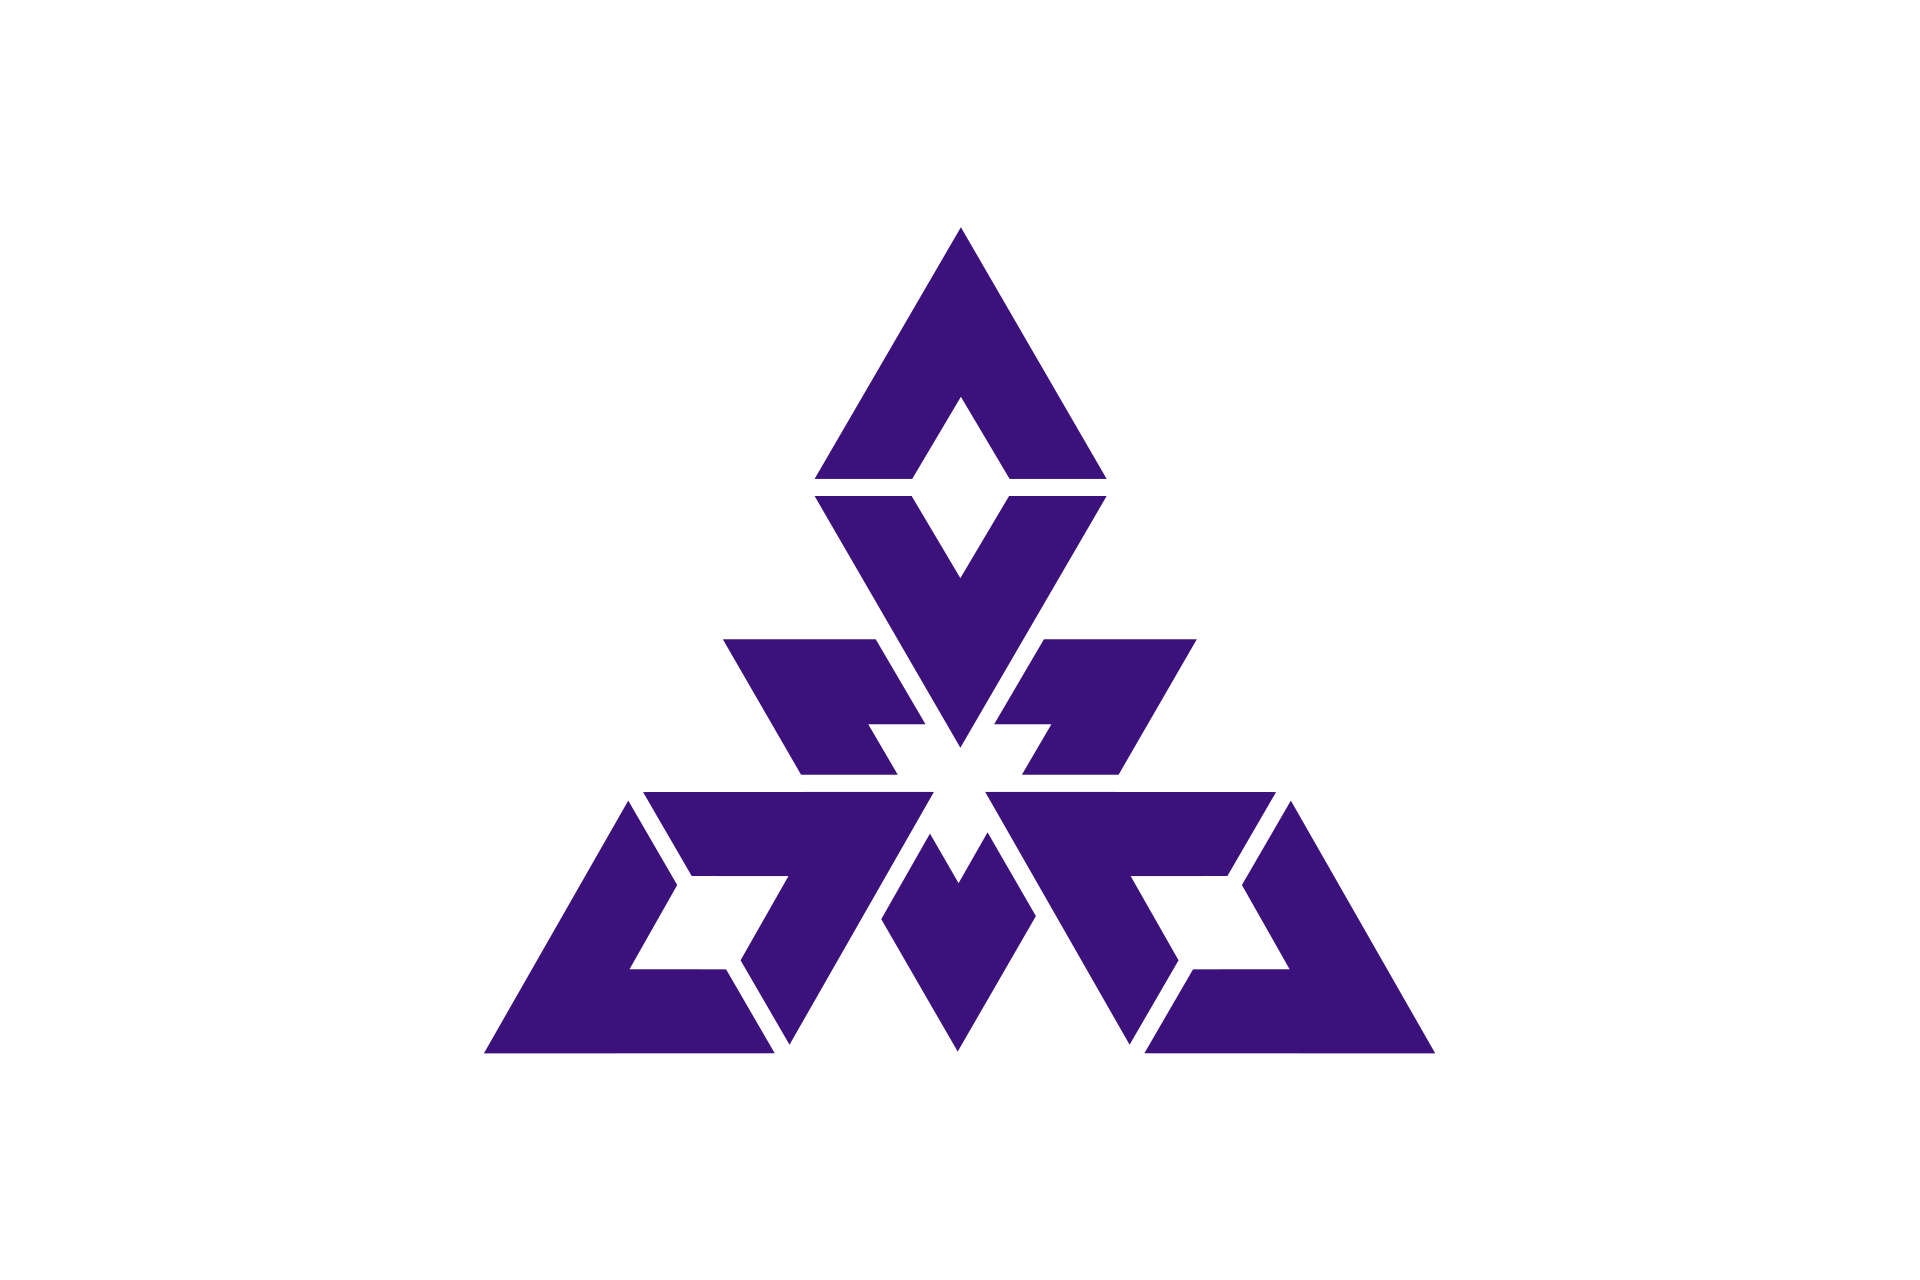 Flag of Fukuoka